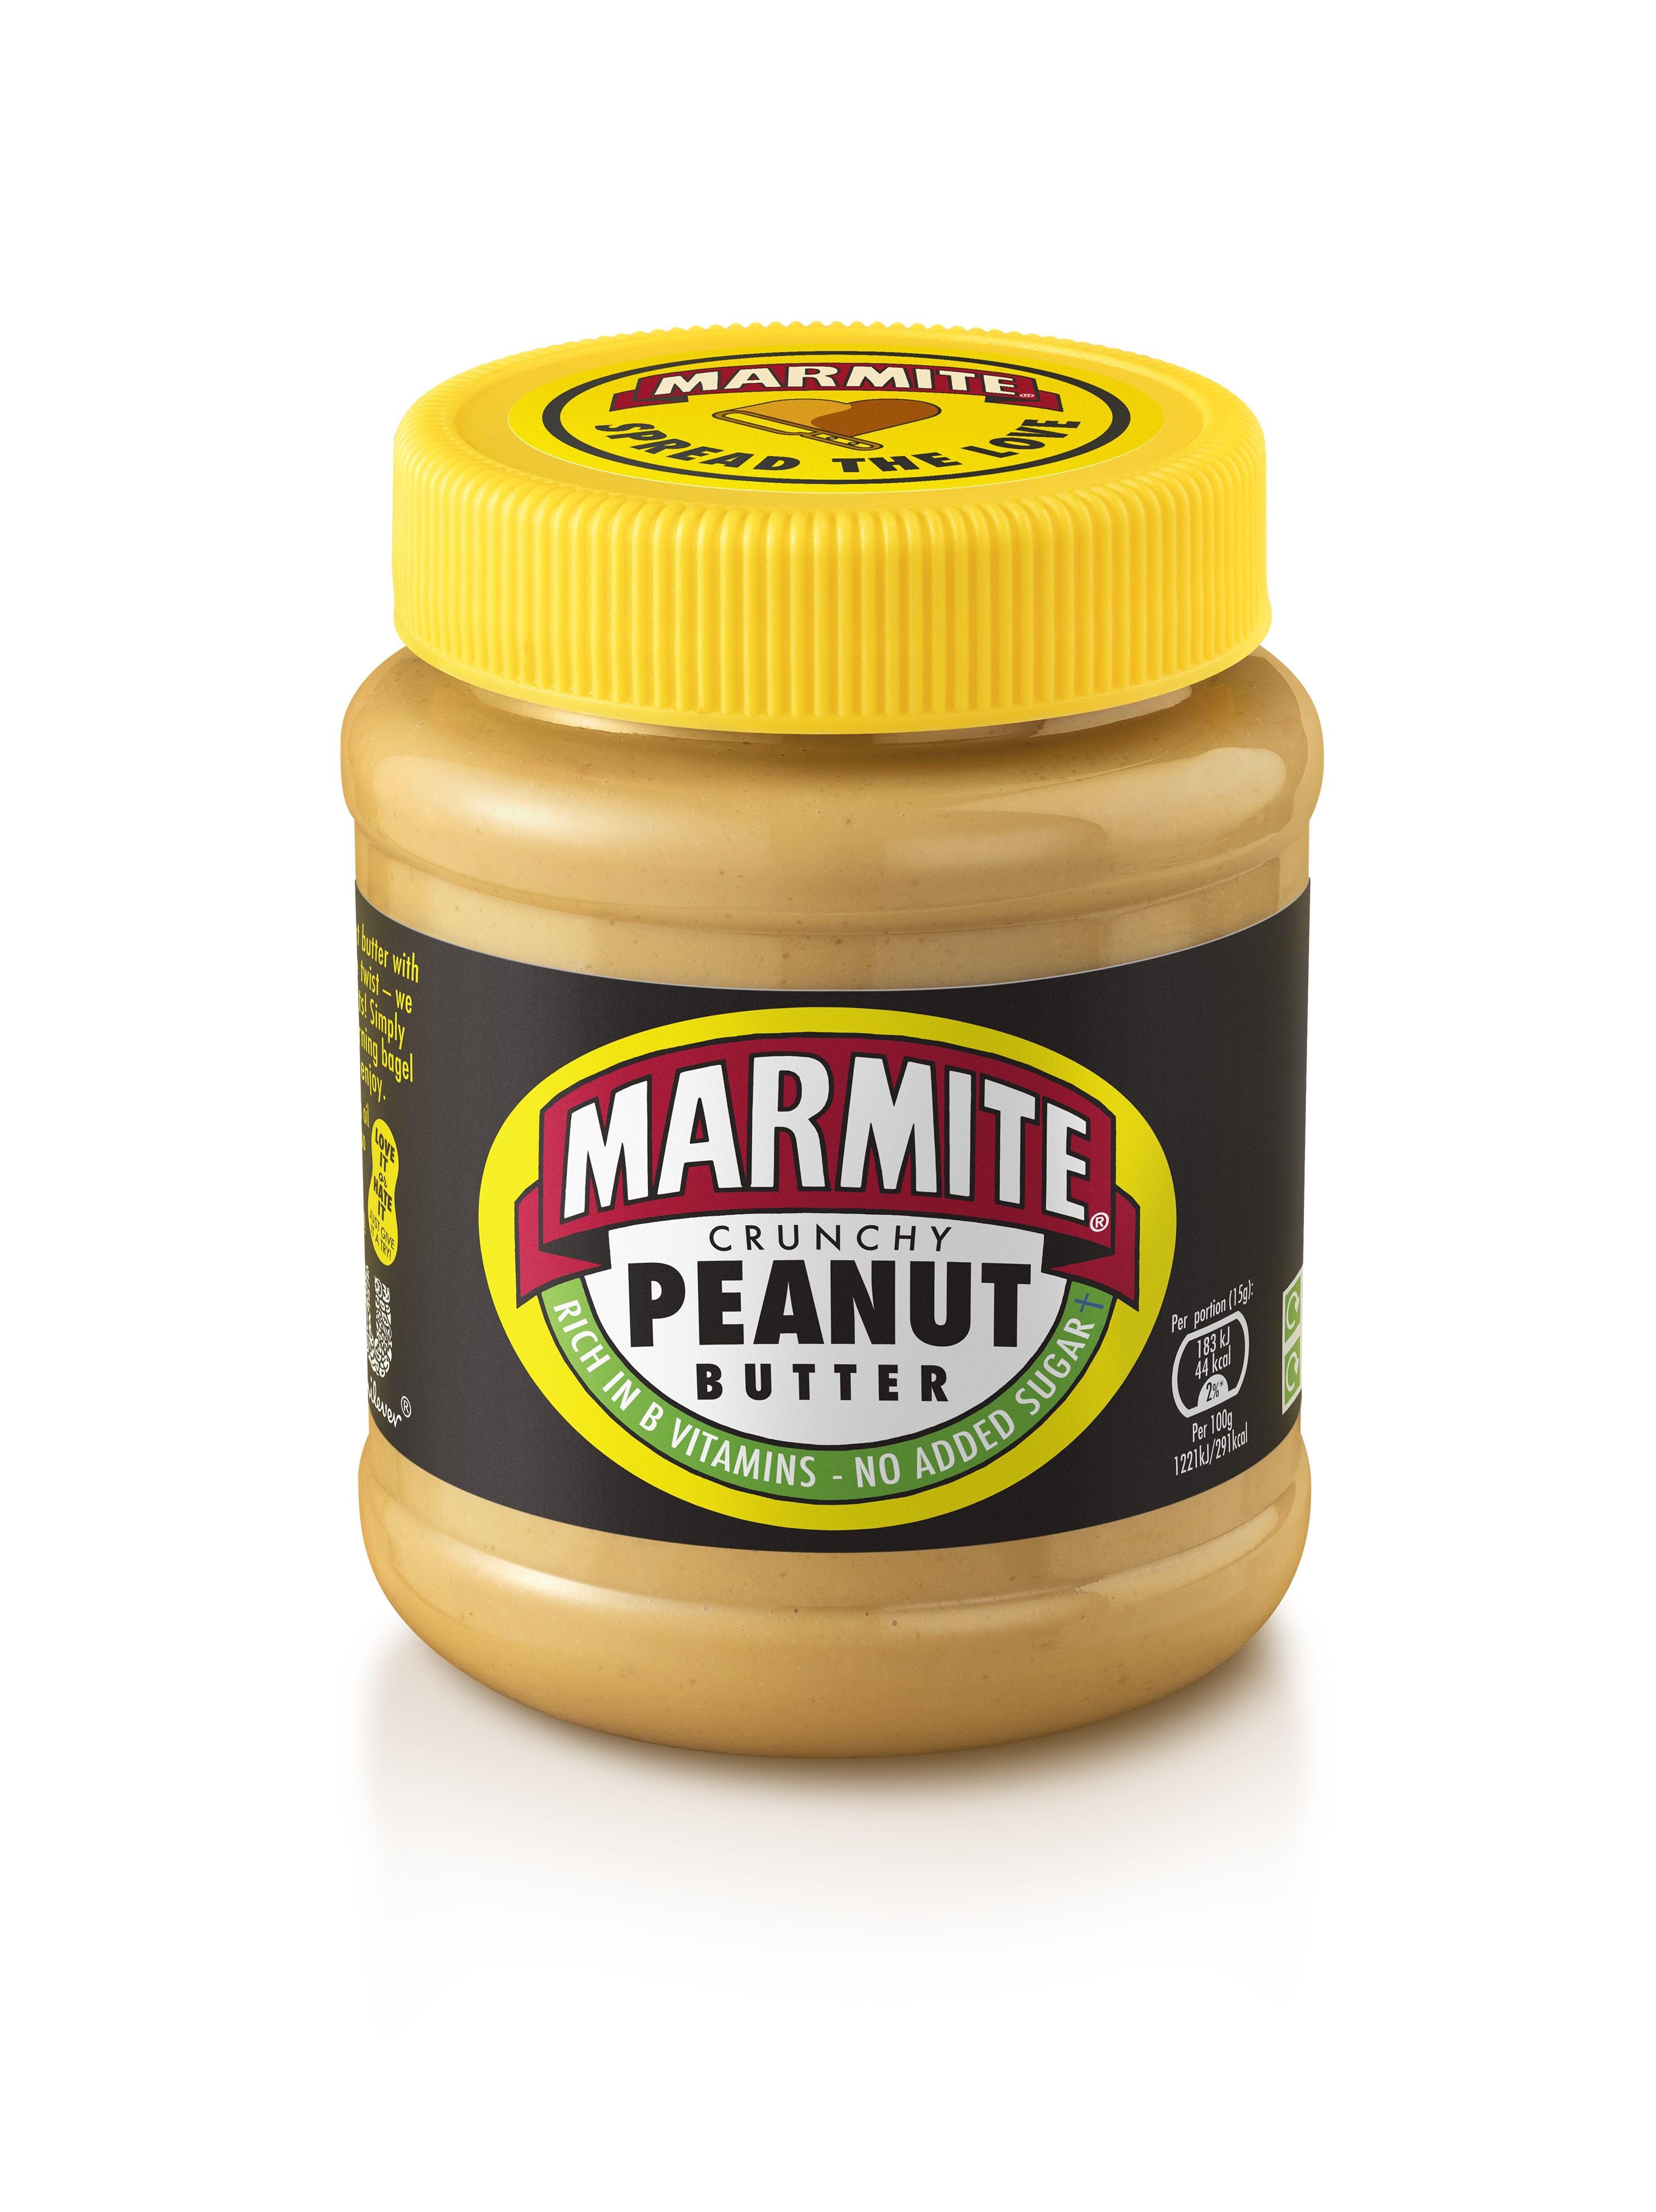 A jar of Marmite Peanute Butter